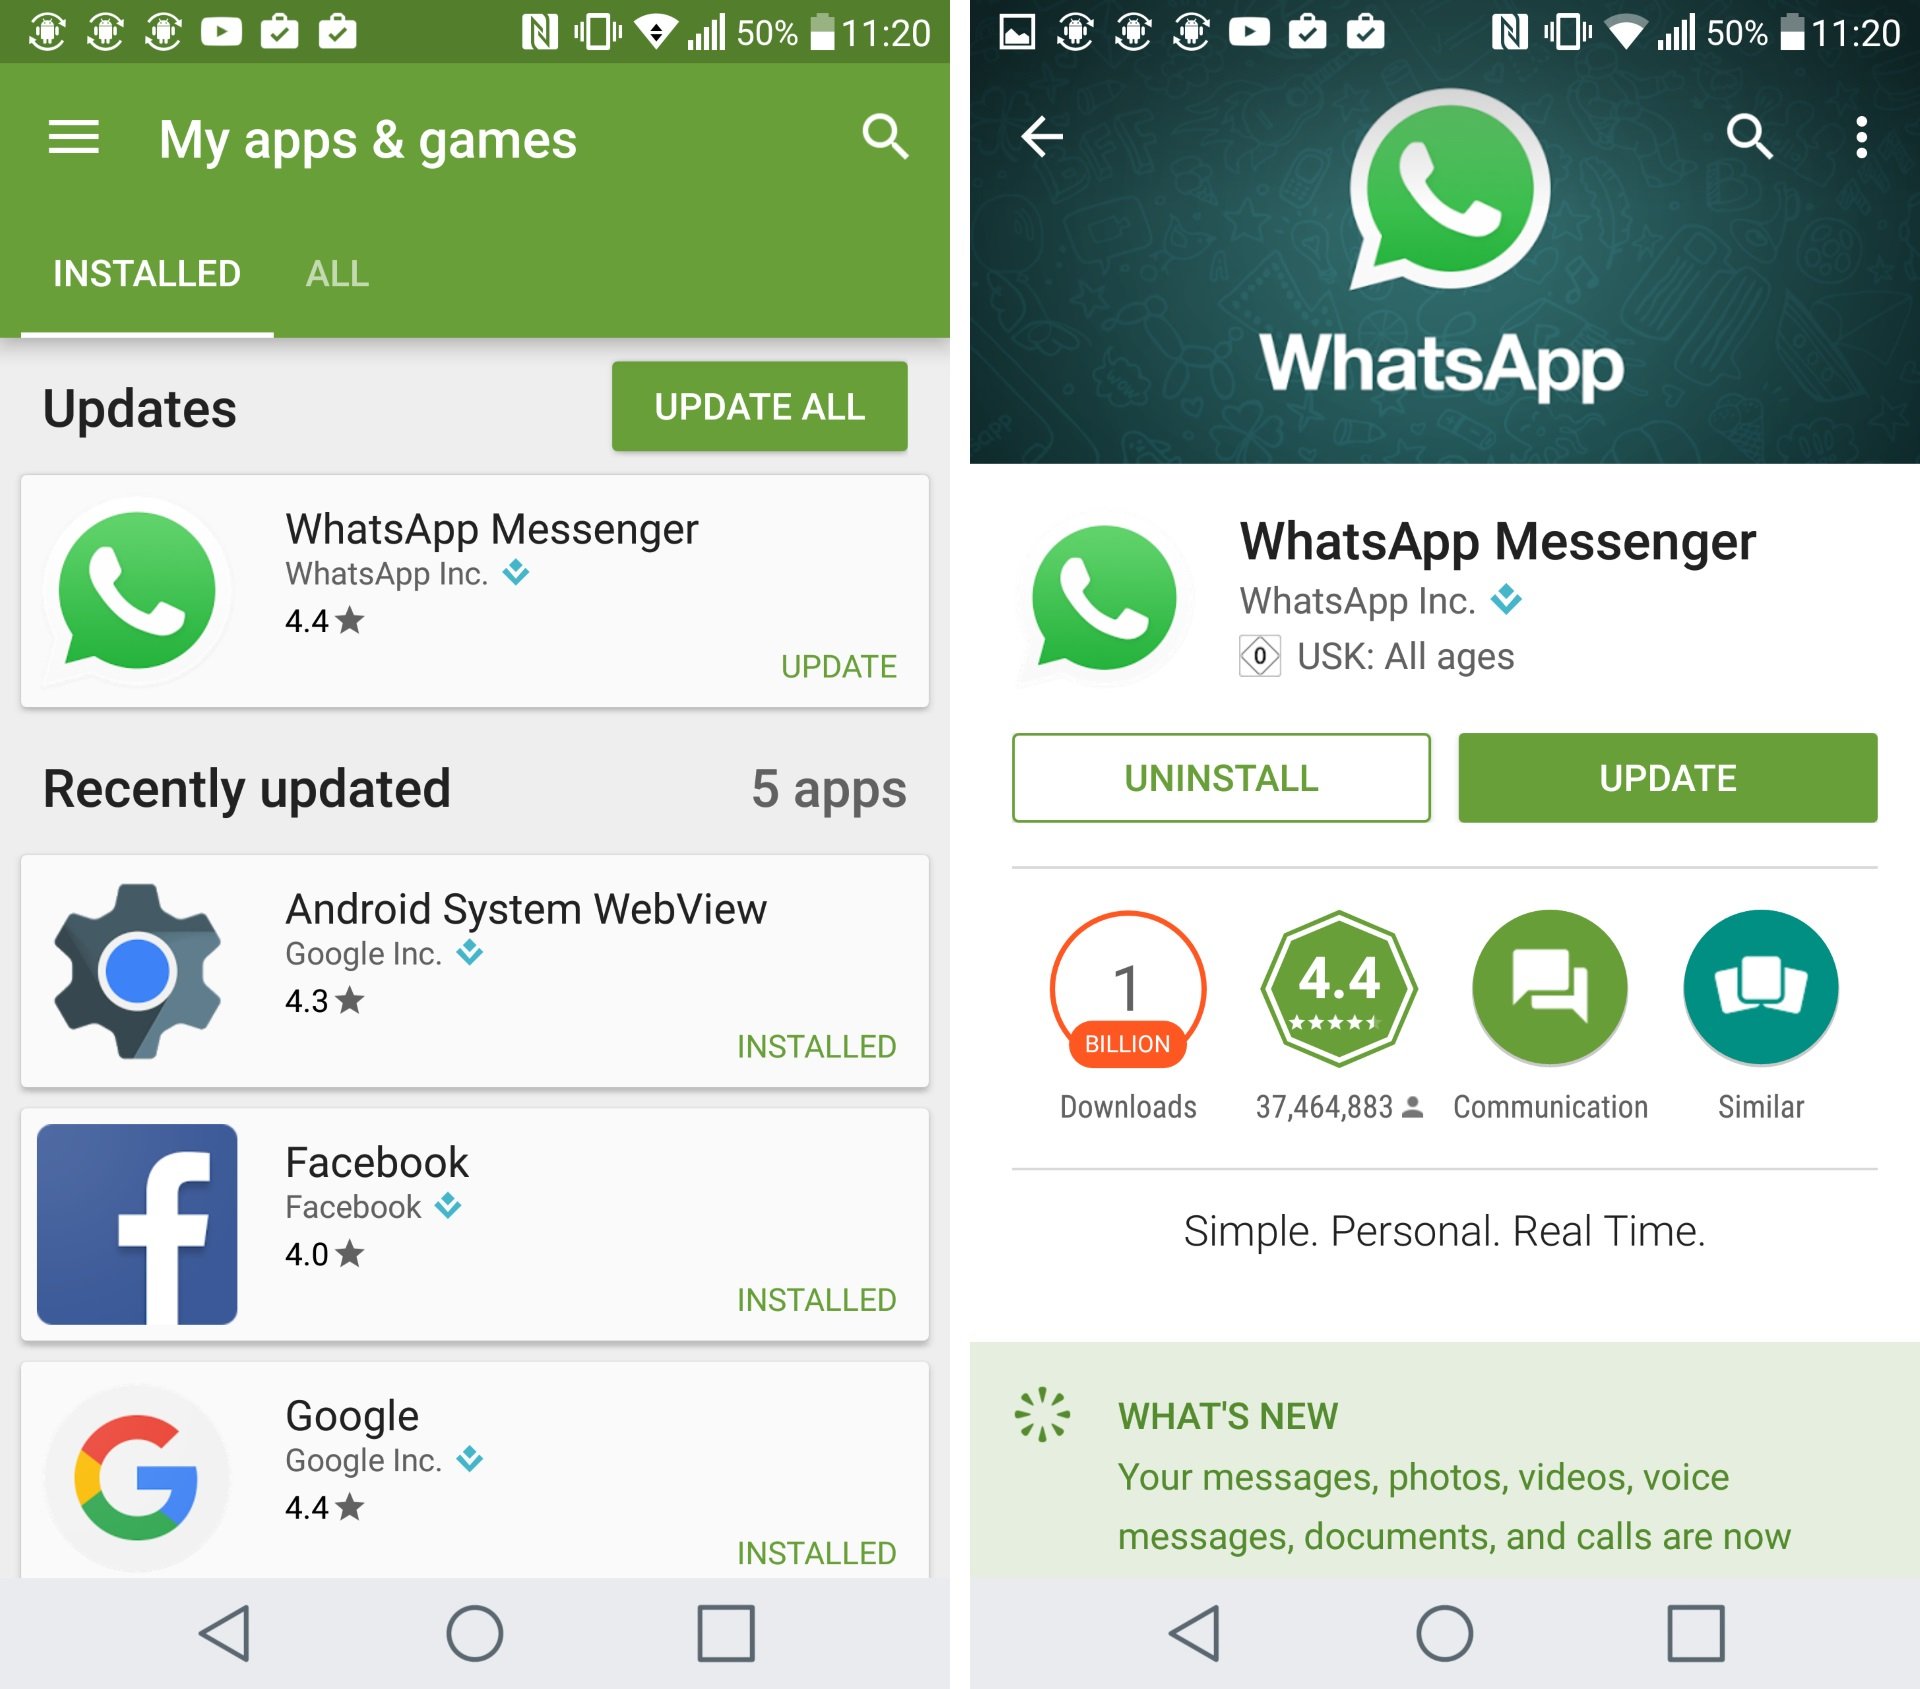 yo whatsapp update new version 2021 download